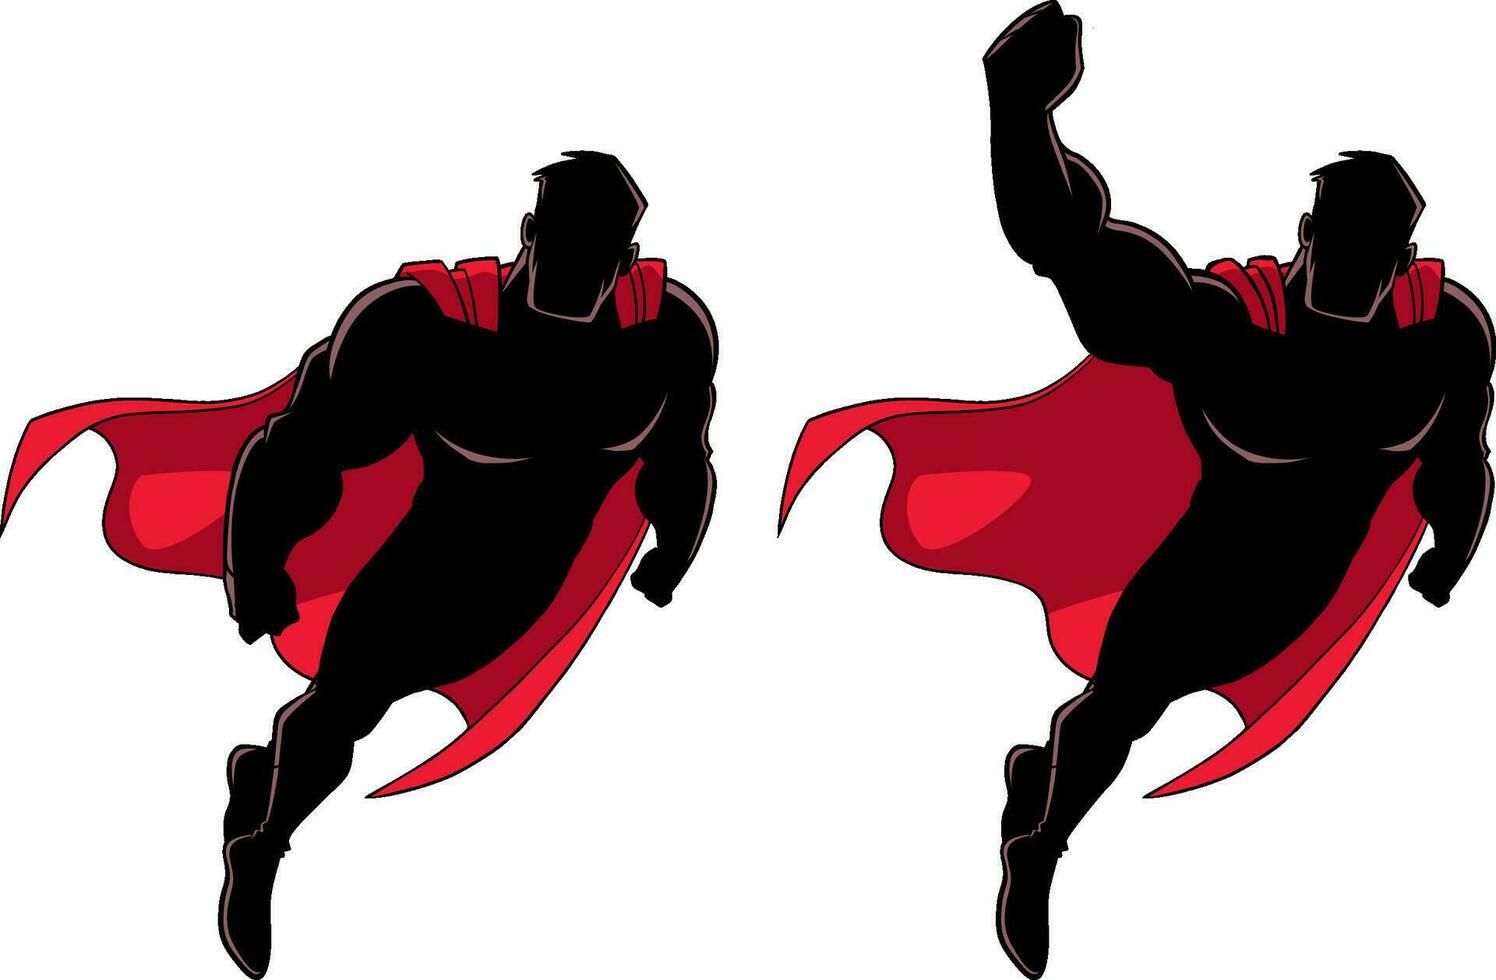 Superhero Flying Upward Silhouettes vector